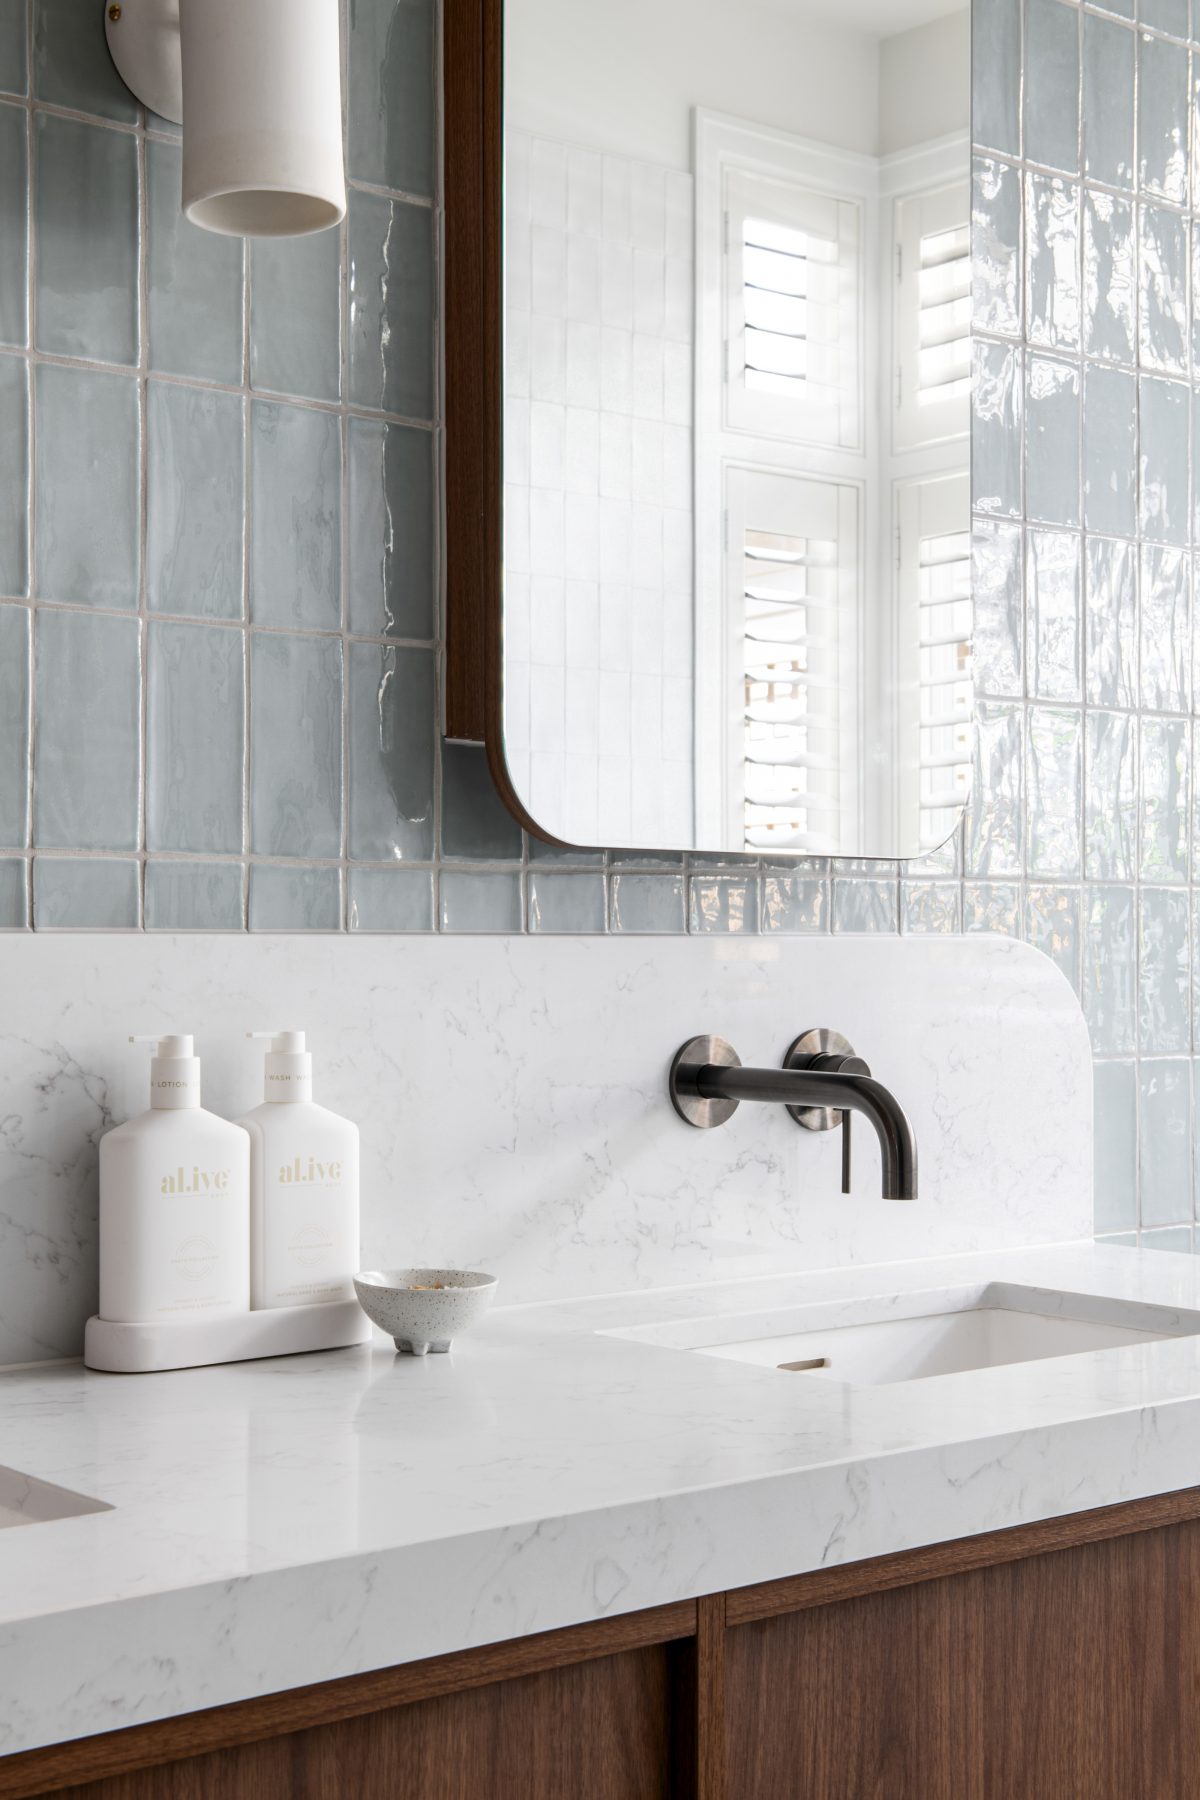 A custom designed bathroom featuring Spanish handmade look tiles. Designed and built by MJ Harris Group.